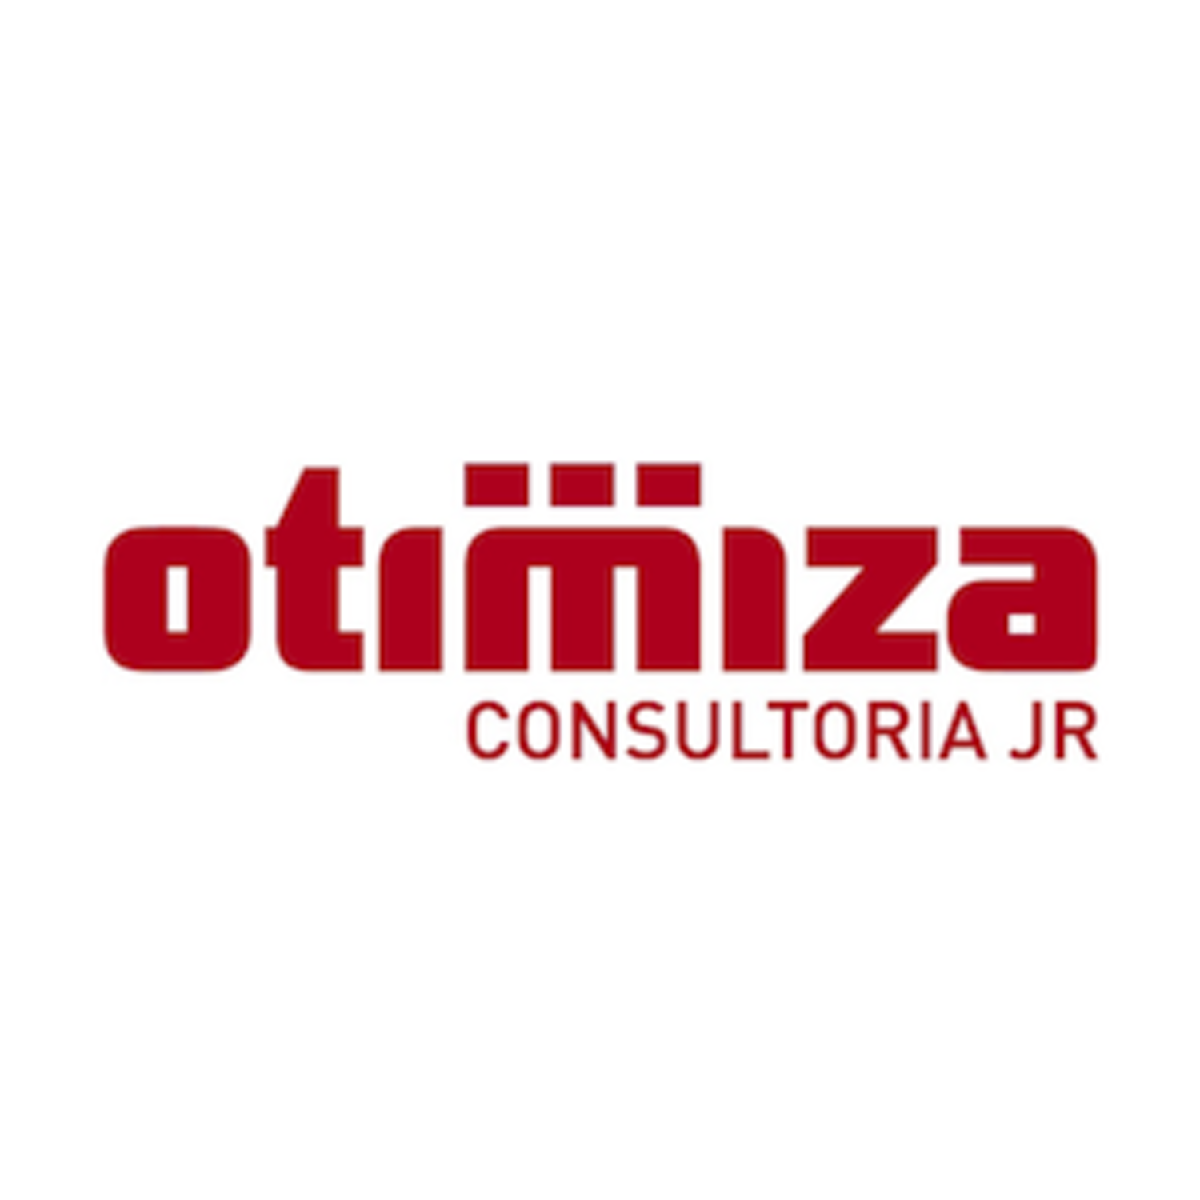 Otimiza Jr. seleciona novos membros para o semestre 2019.2